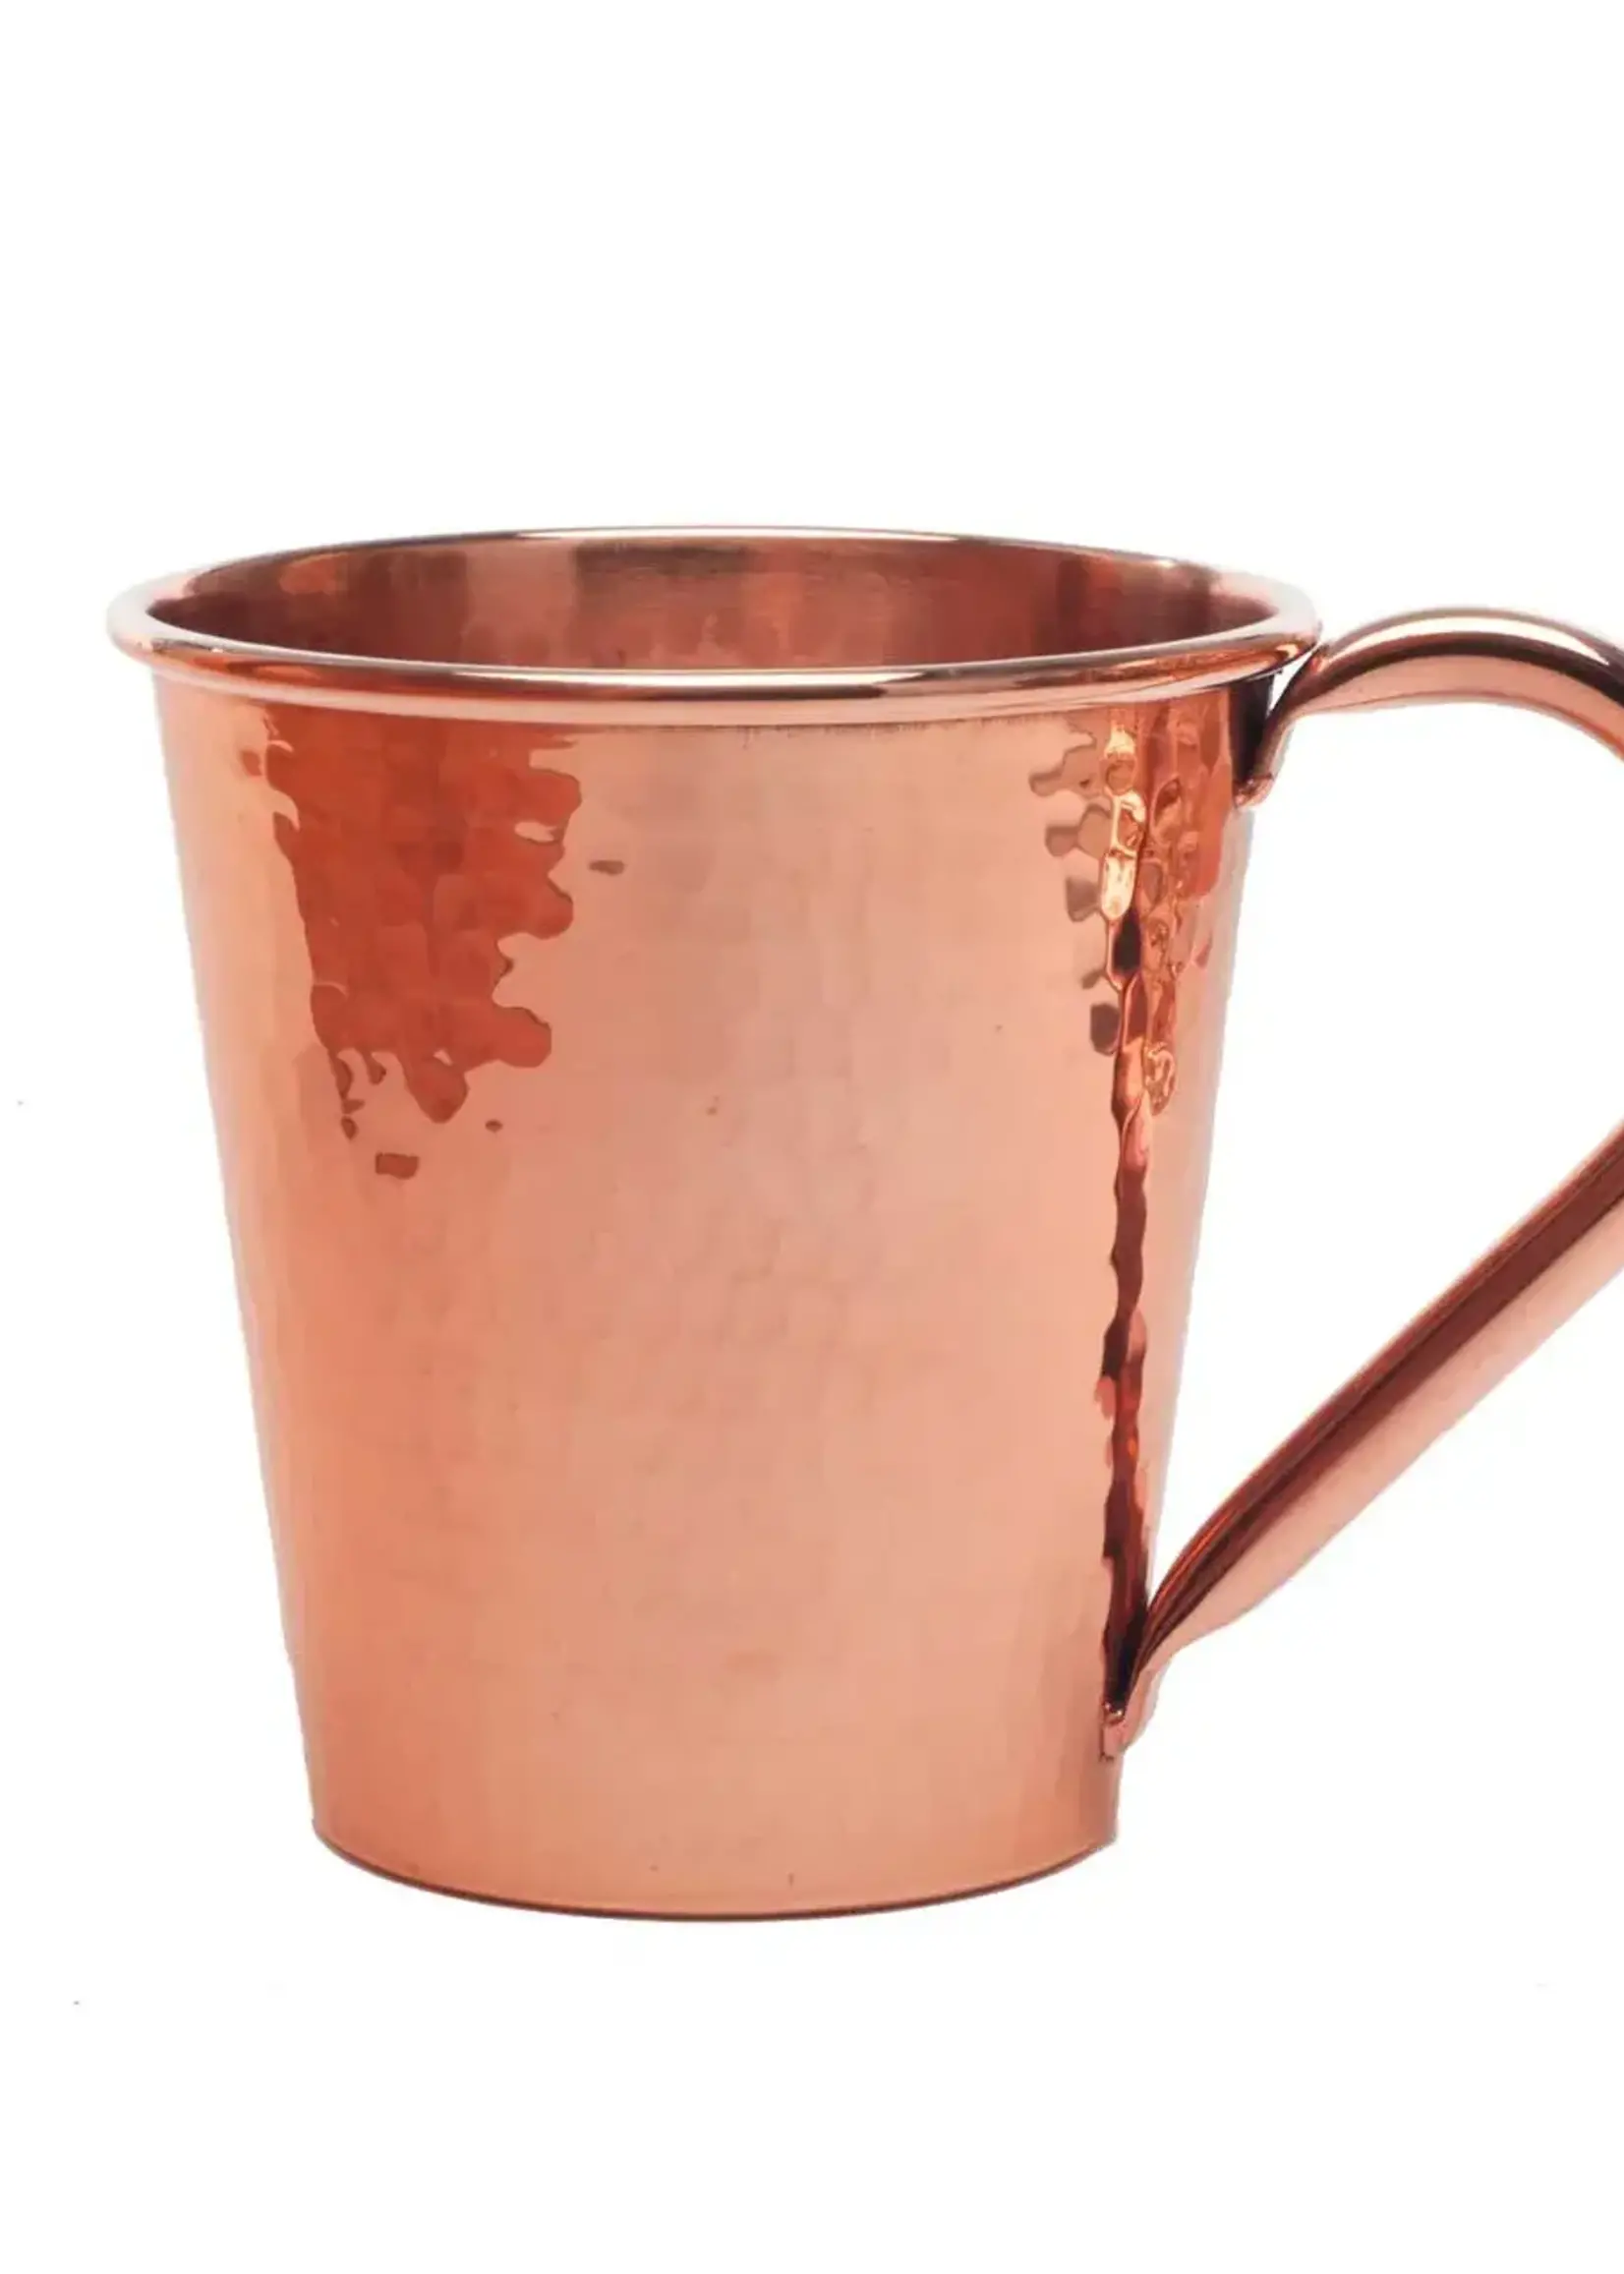 Sertodo Copper Moscow Mule Mug, Copper Handle 18oz.